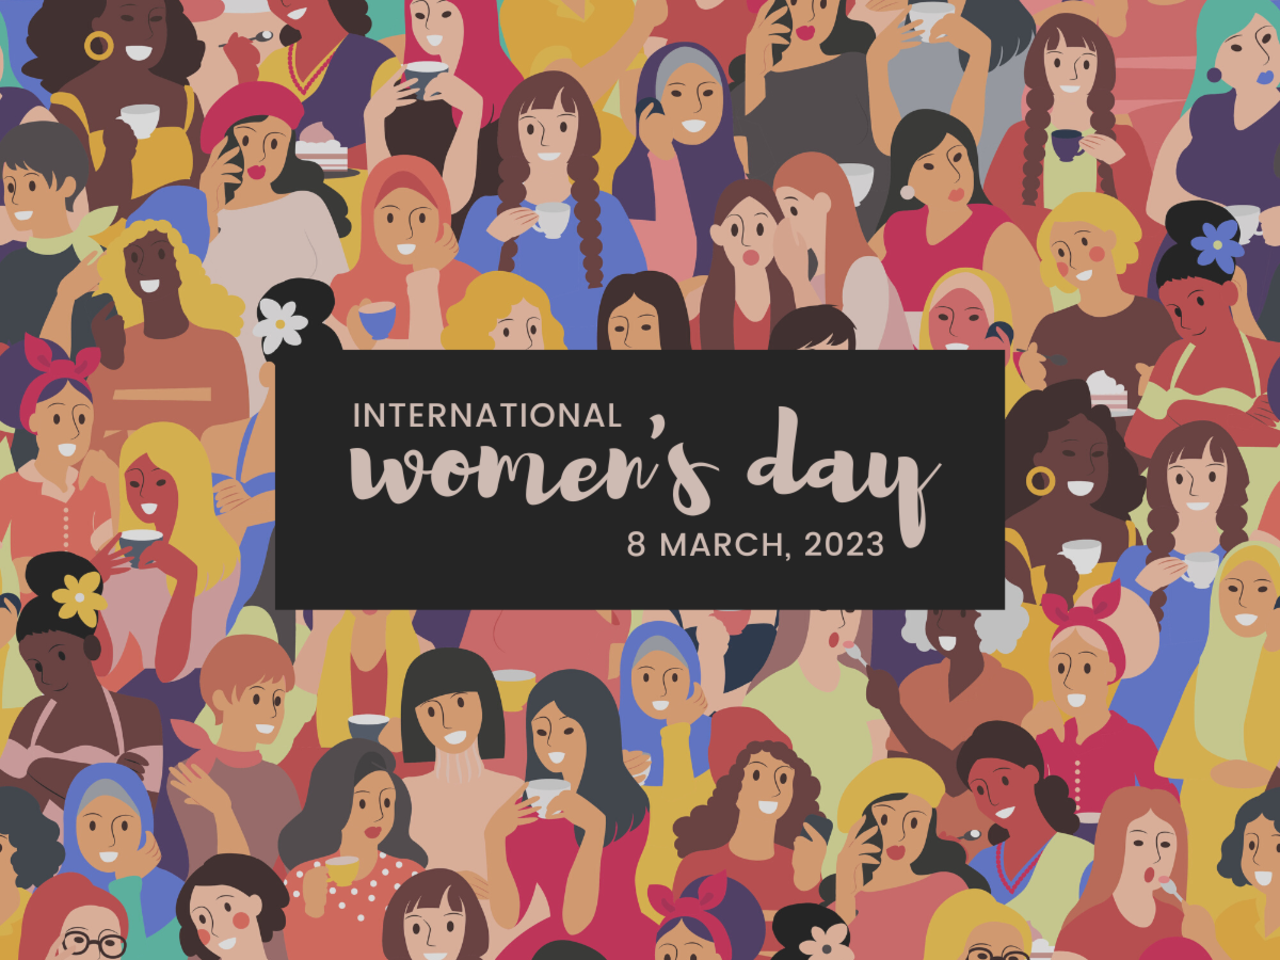 IWD: International Women's Day 2023 campaign theme: #EmbraceEquity